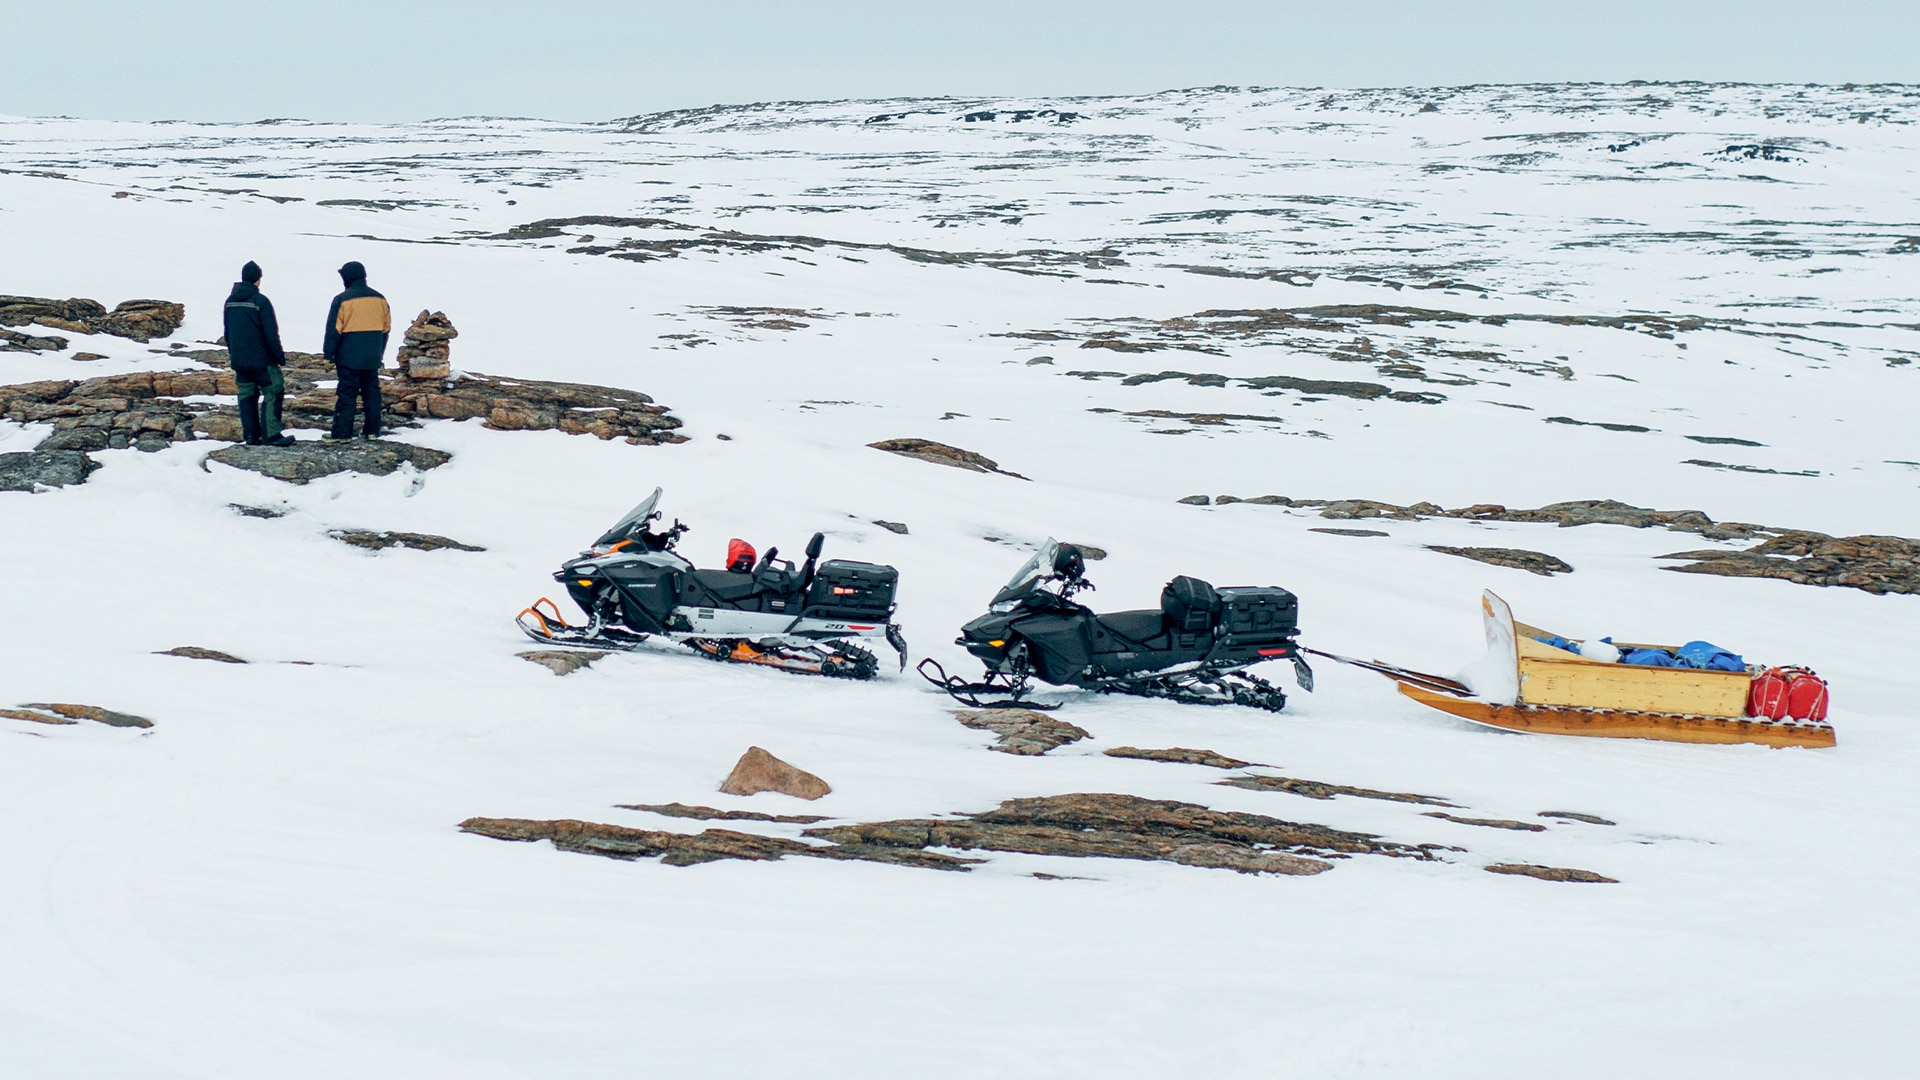 Vidéo YouTube - Ski-Doo Rad Rides E4 - Pêche sur glace au Nunavut